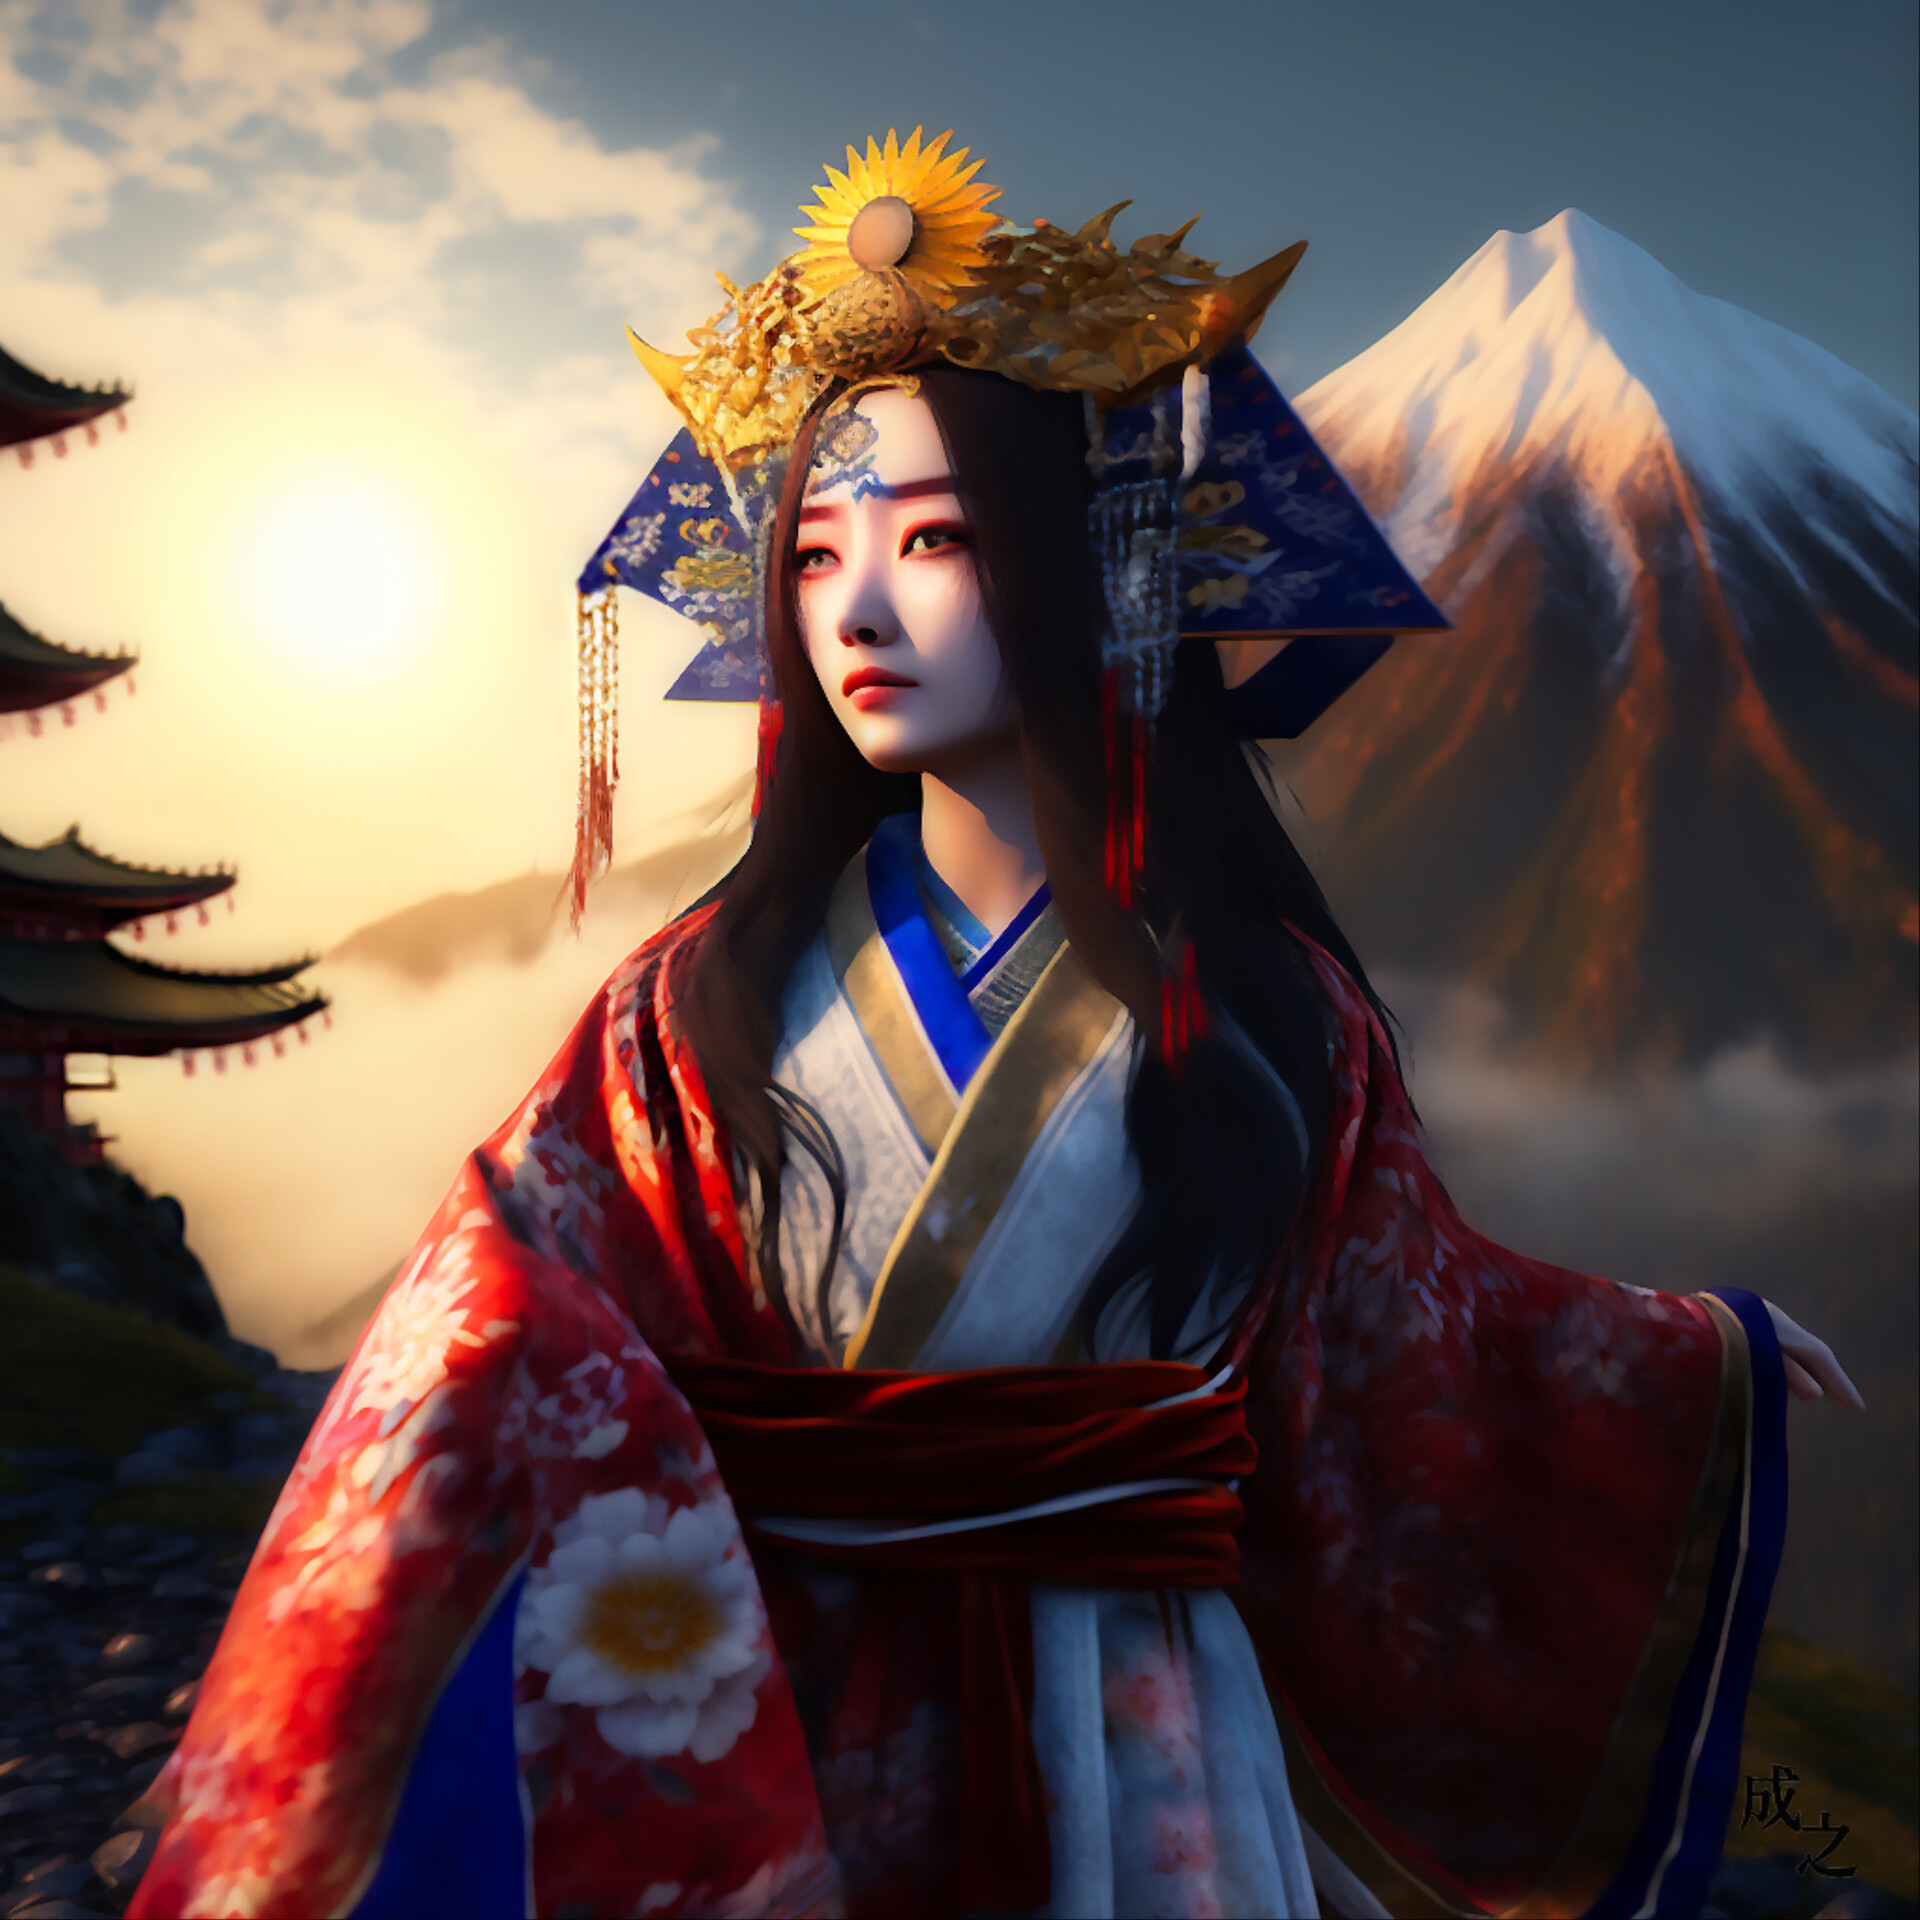 Amaterasu - imperial goddess of the sun